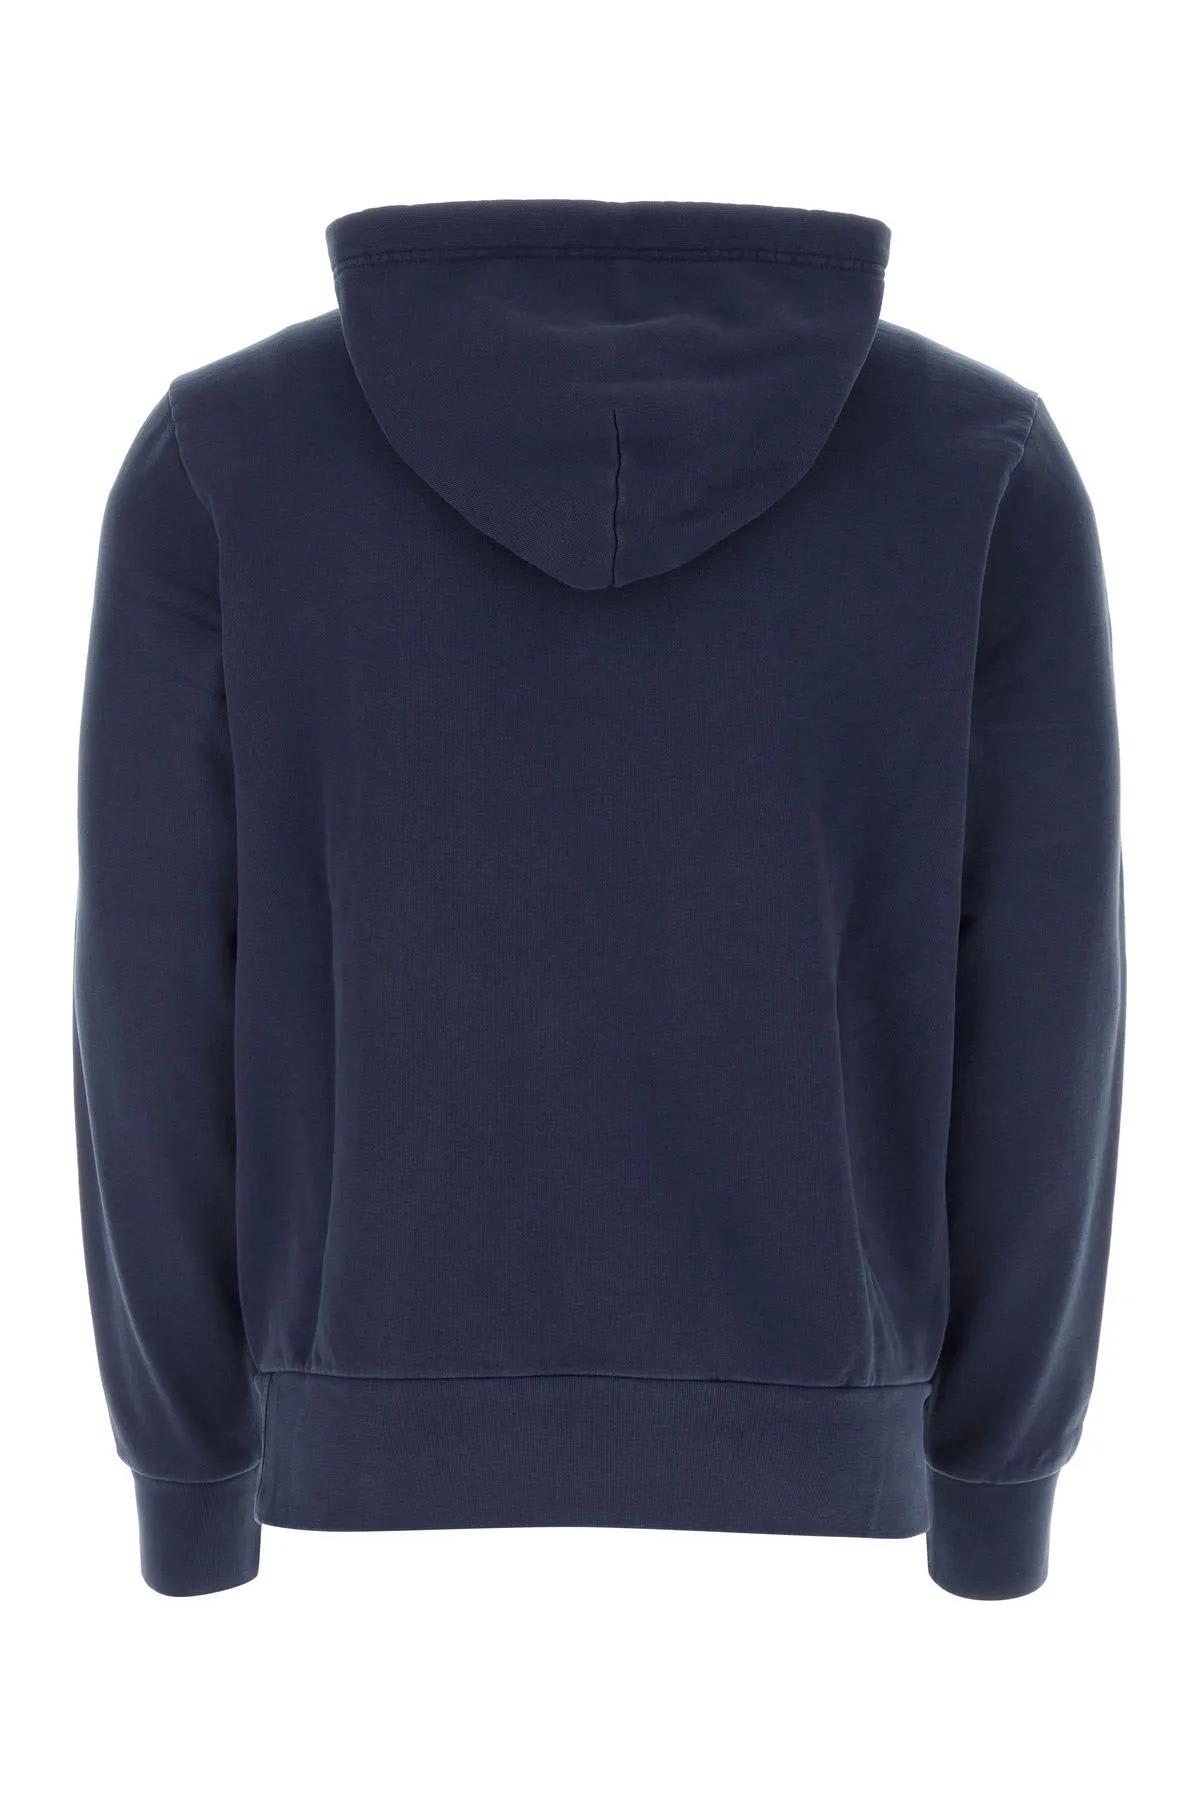 Shop Polo Ralph Lauren Navy Blue Cotton Sweatshirt Fleece